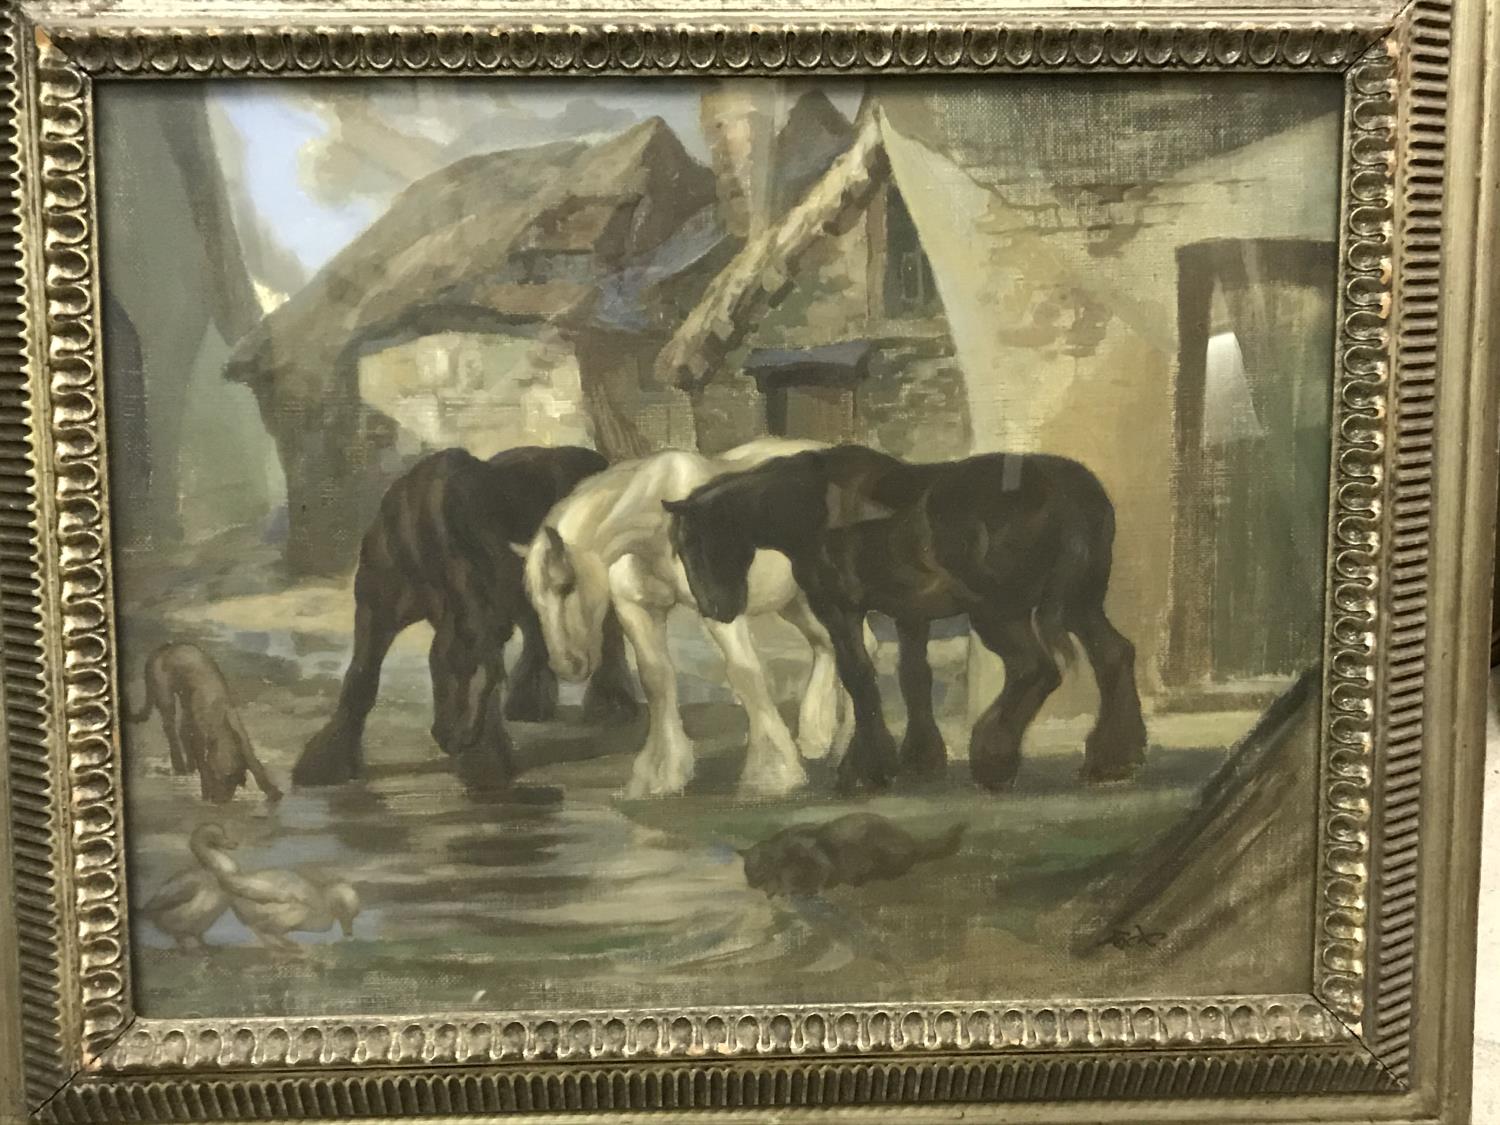 COX (or JOCK?) "Farmyard scene with heavy horses, dog, cat and ducks" oil on canvas,